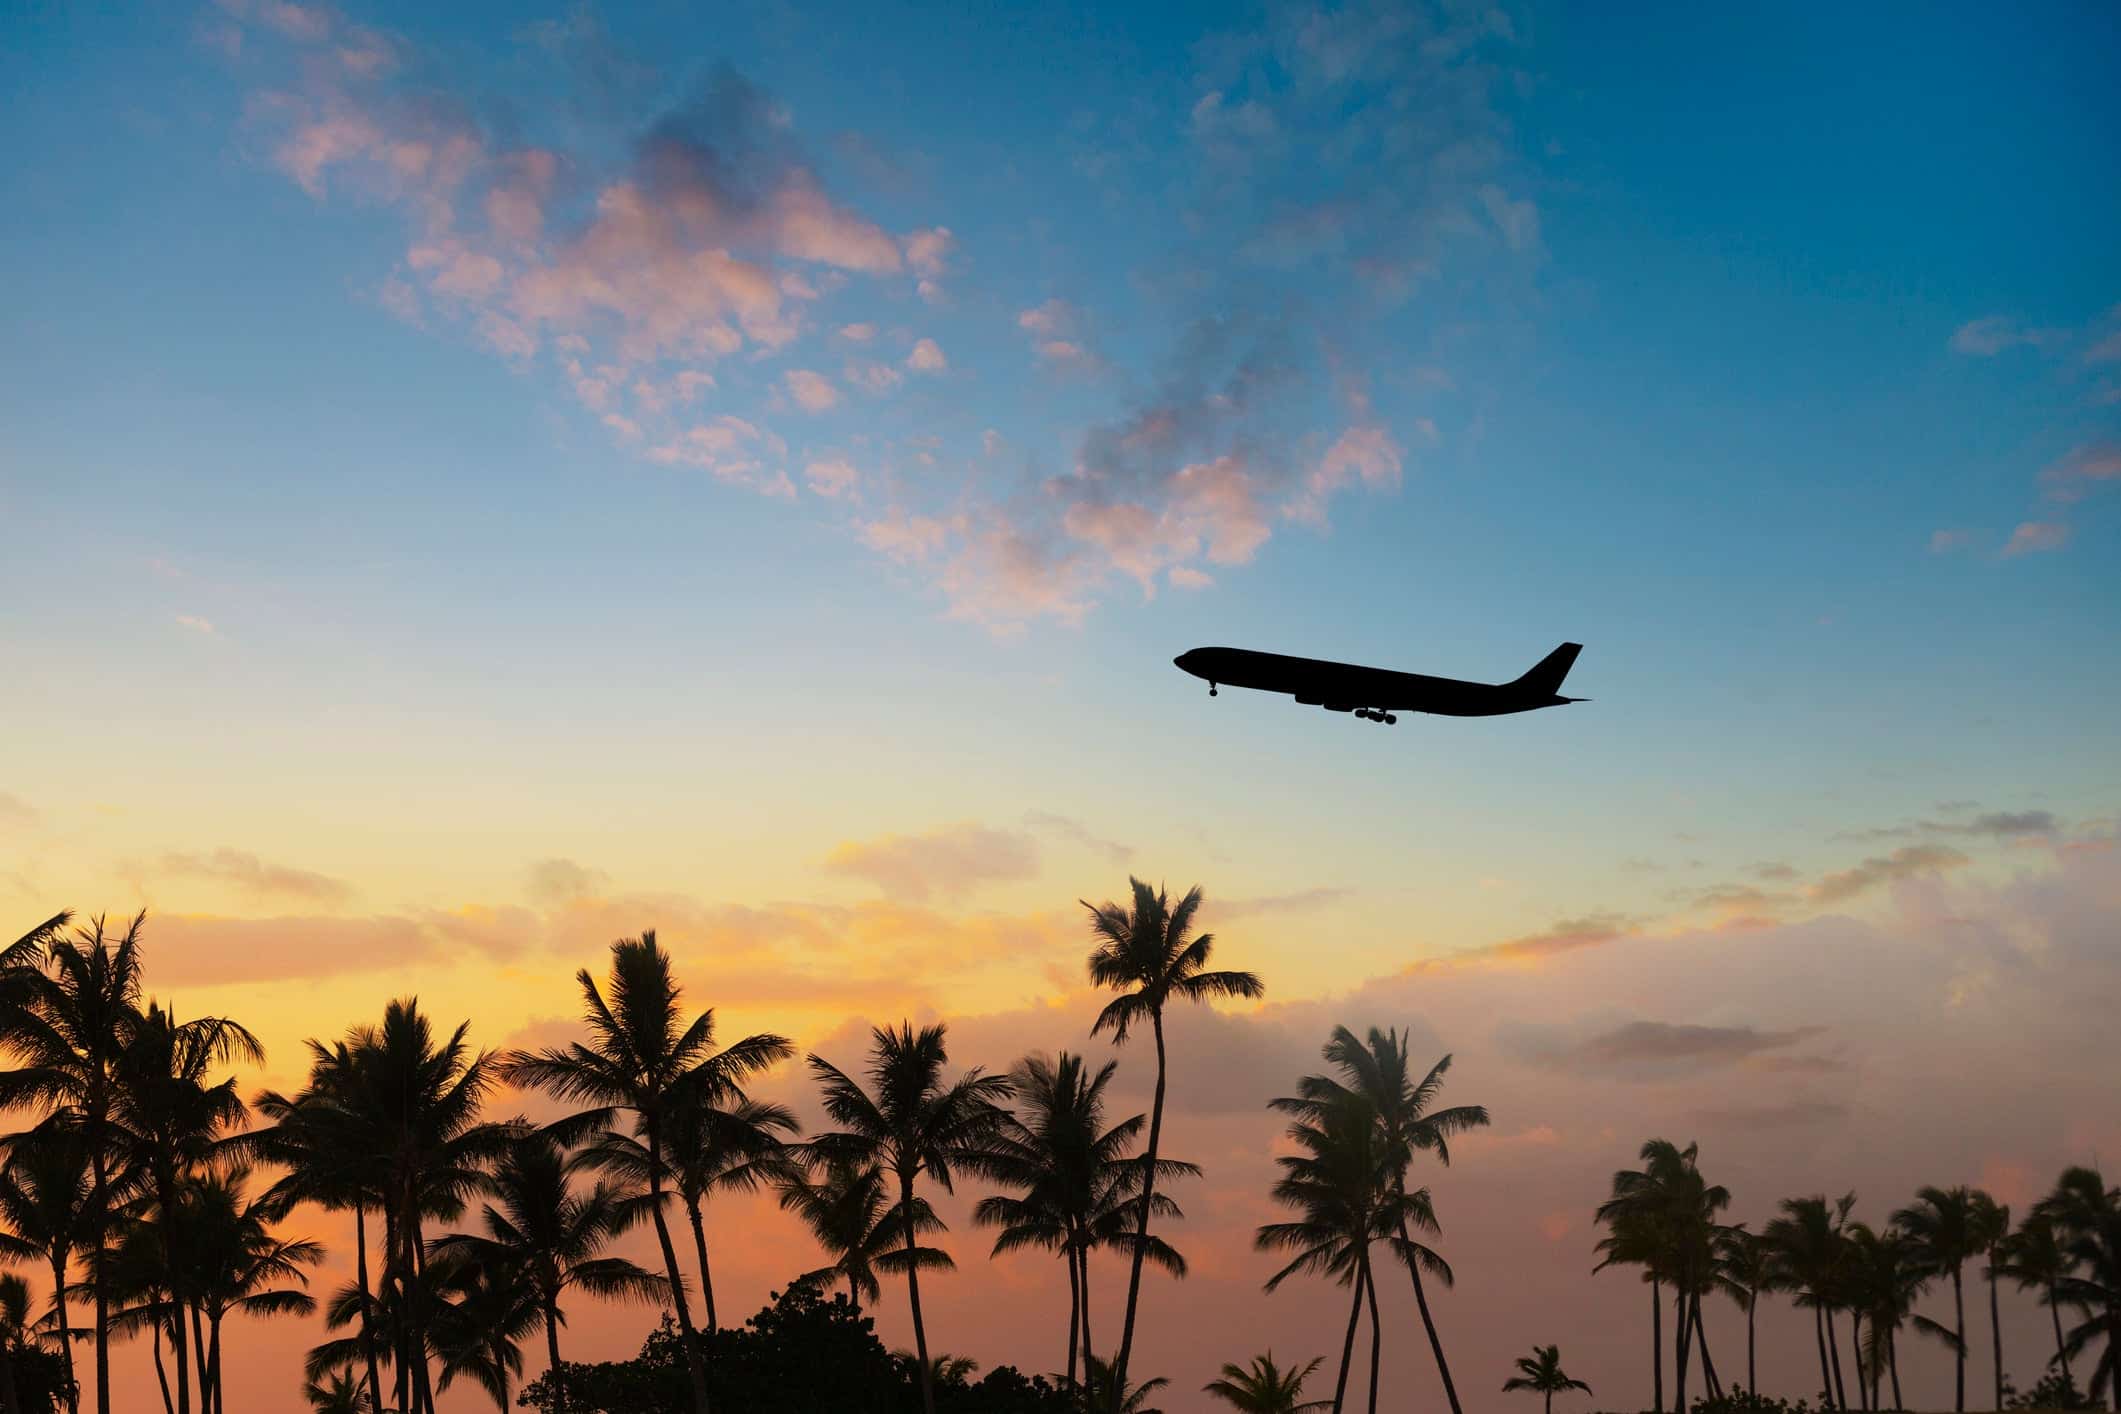 Pourquoi les actions des compagnies aériennes augmentent à nouveau aujourd'hui silhouette of airplane flying over palm trees in sunset getty